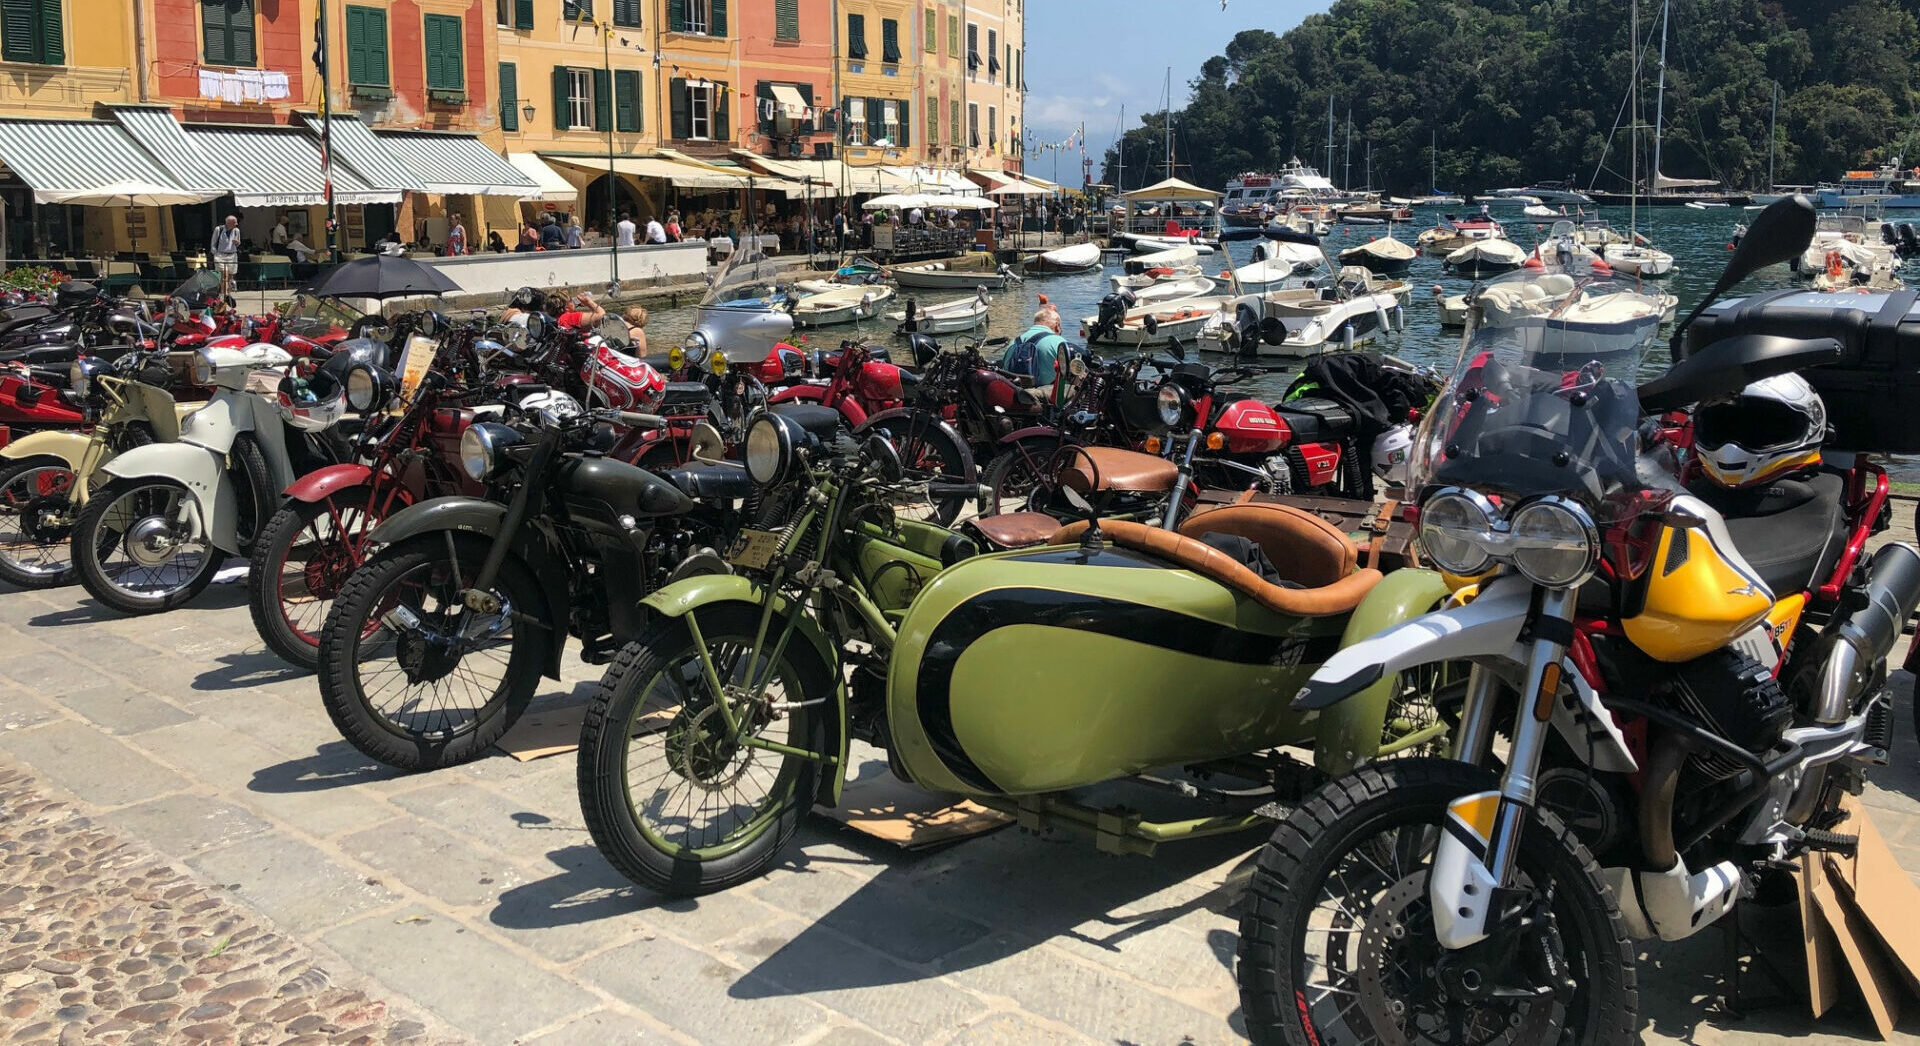 Moto Guzzi motorcycle gathered in Piazzetta a Portofino. Photo courtesy Elena Bagnasco.